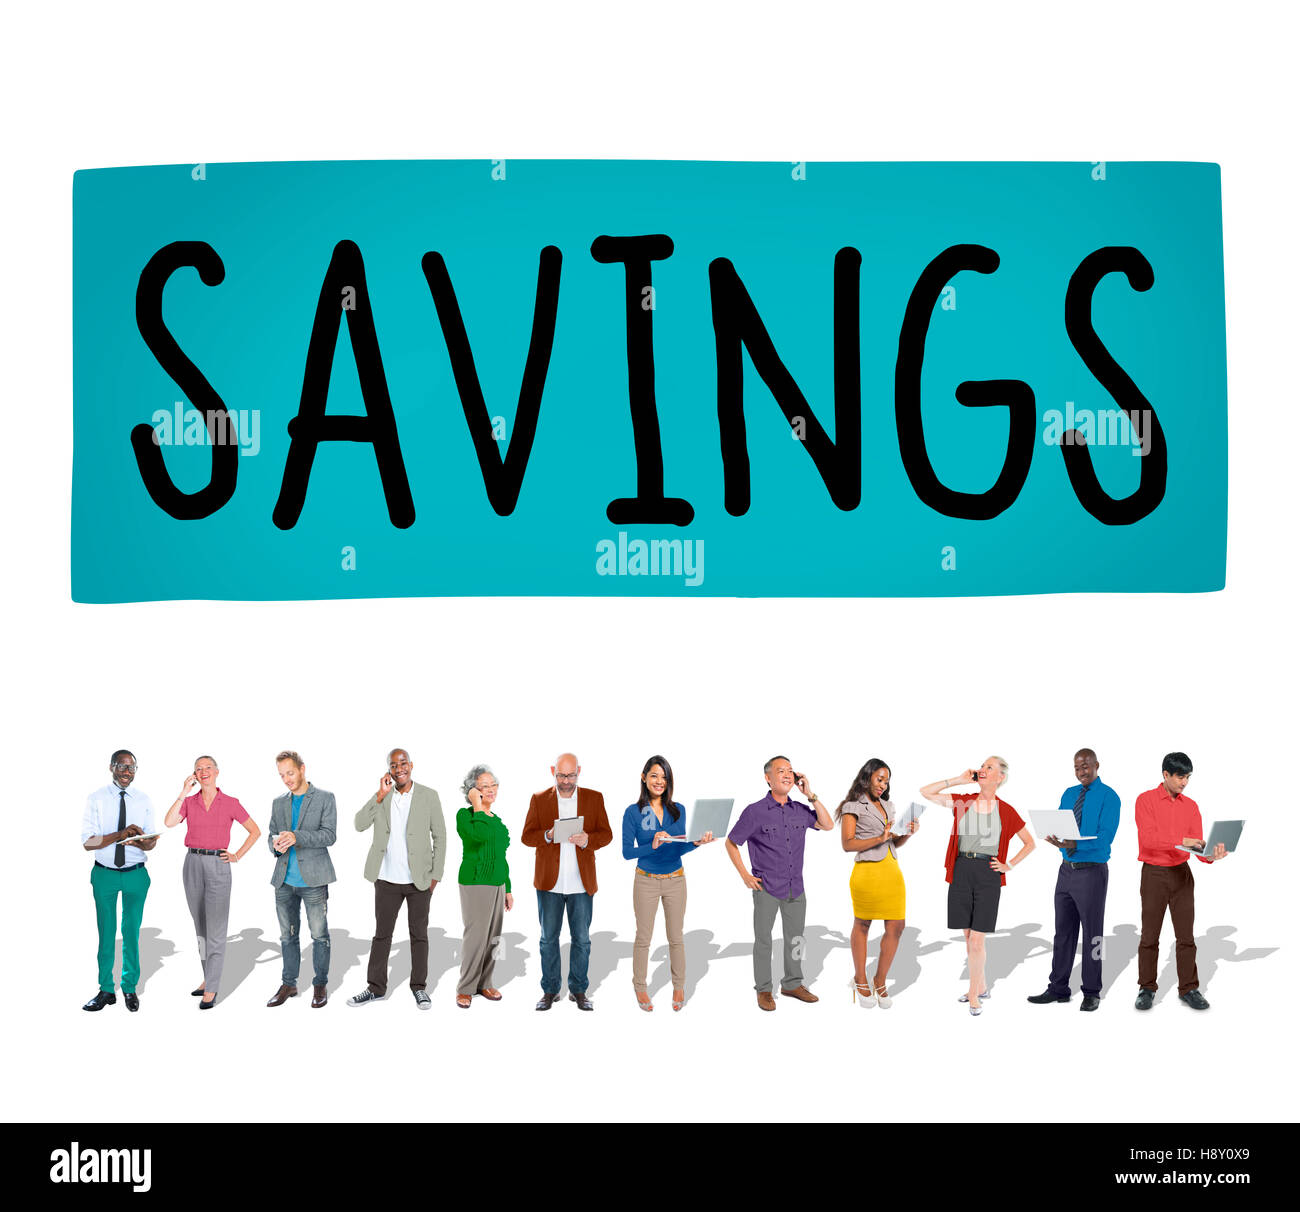 Savings Accounting Economy Money Financial Concept Stock Photo